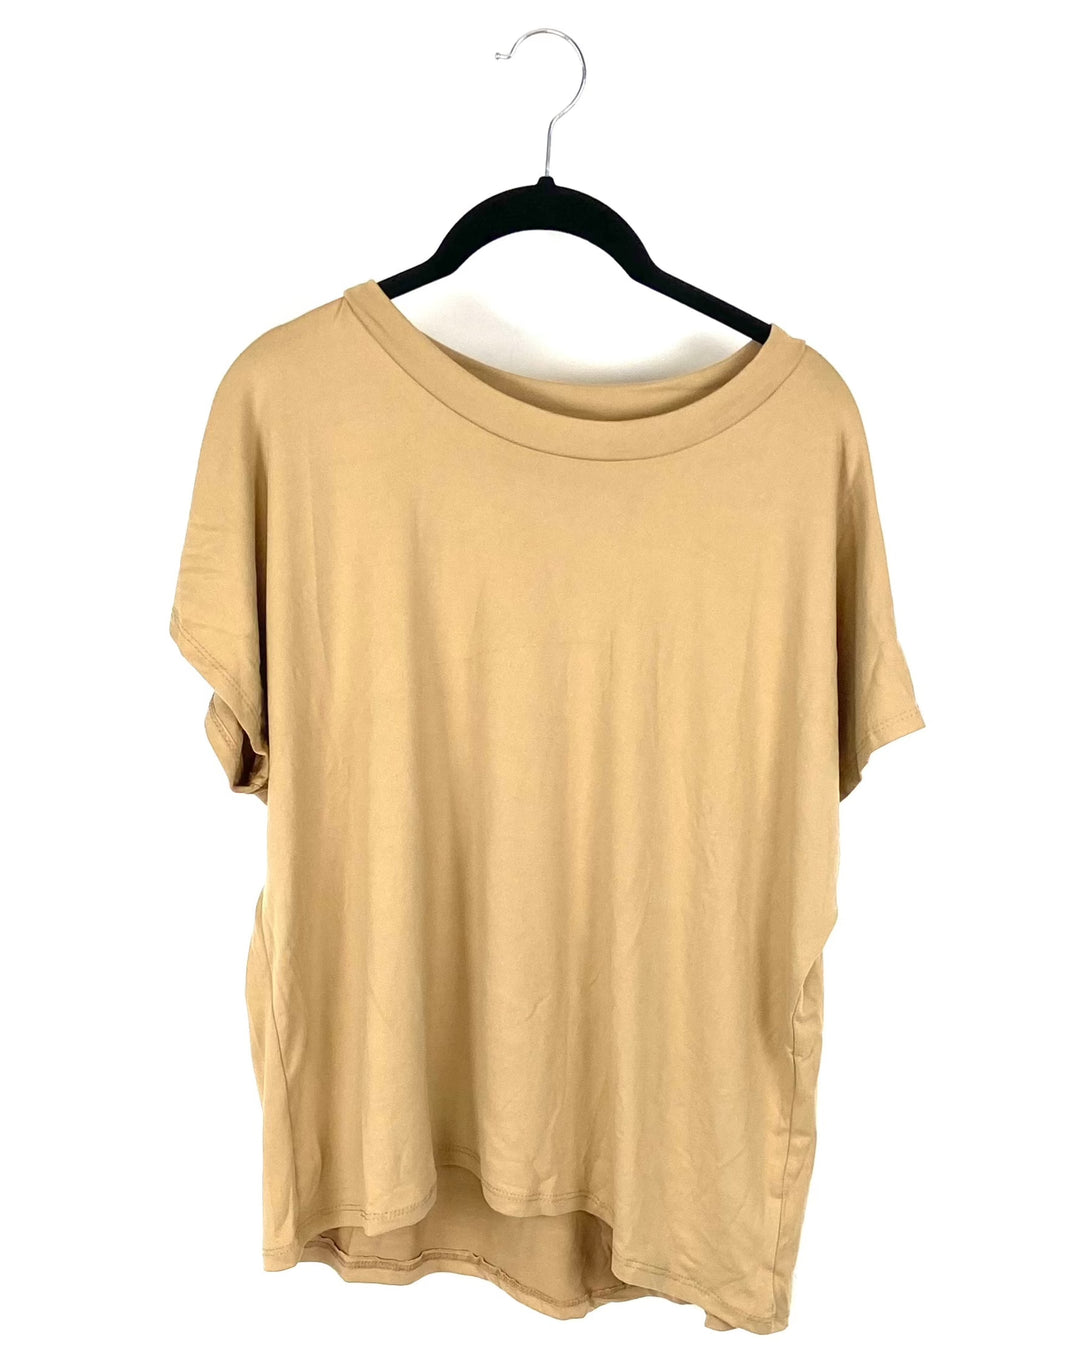 Tan Flowy T-Shirt - Small